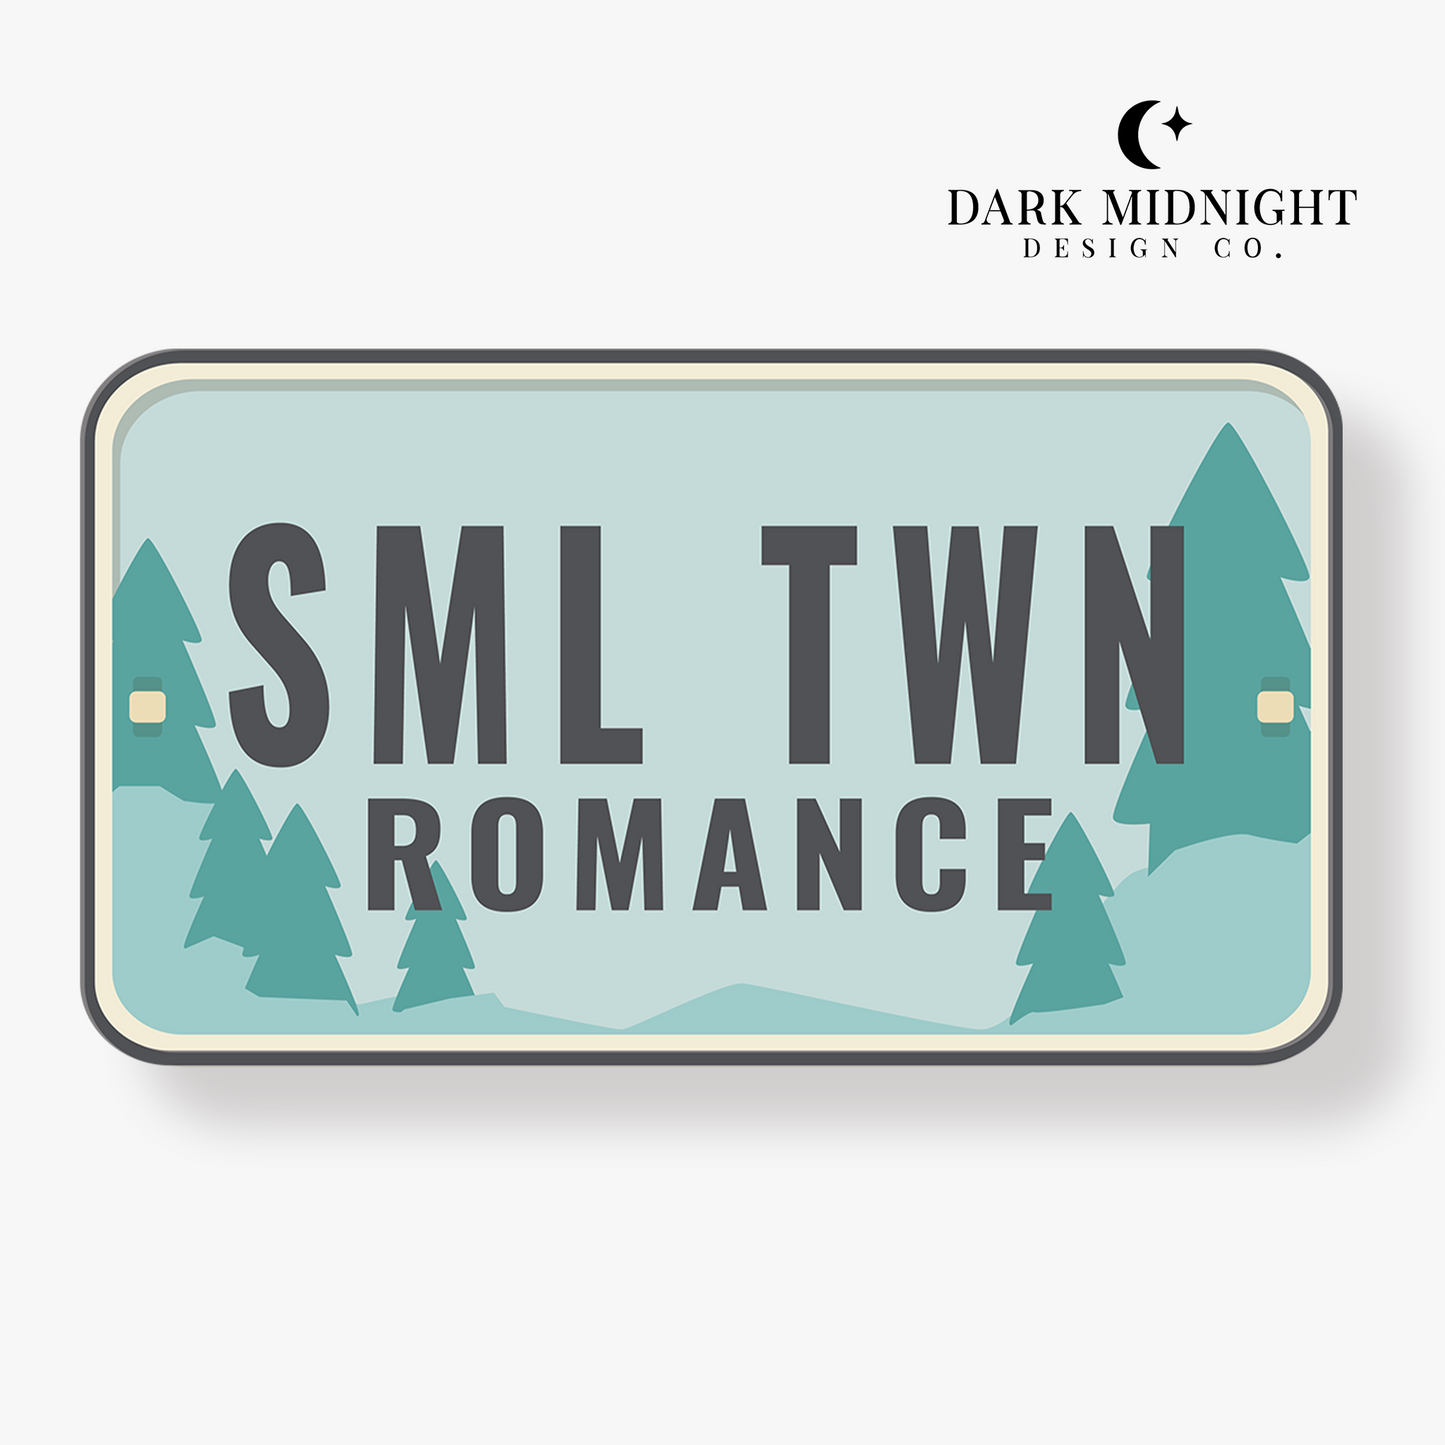 Small Town Romance License Plate Sticker